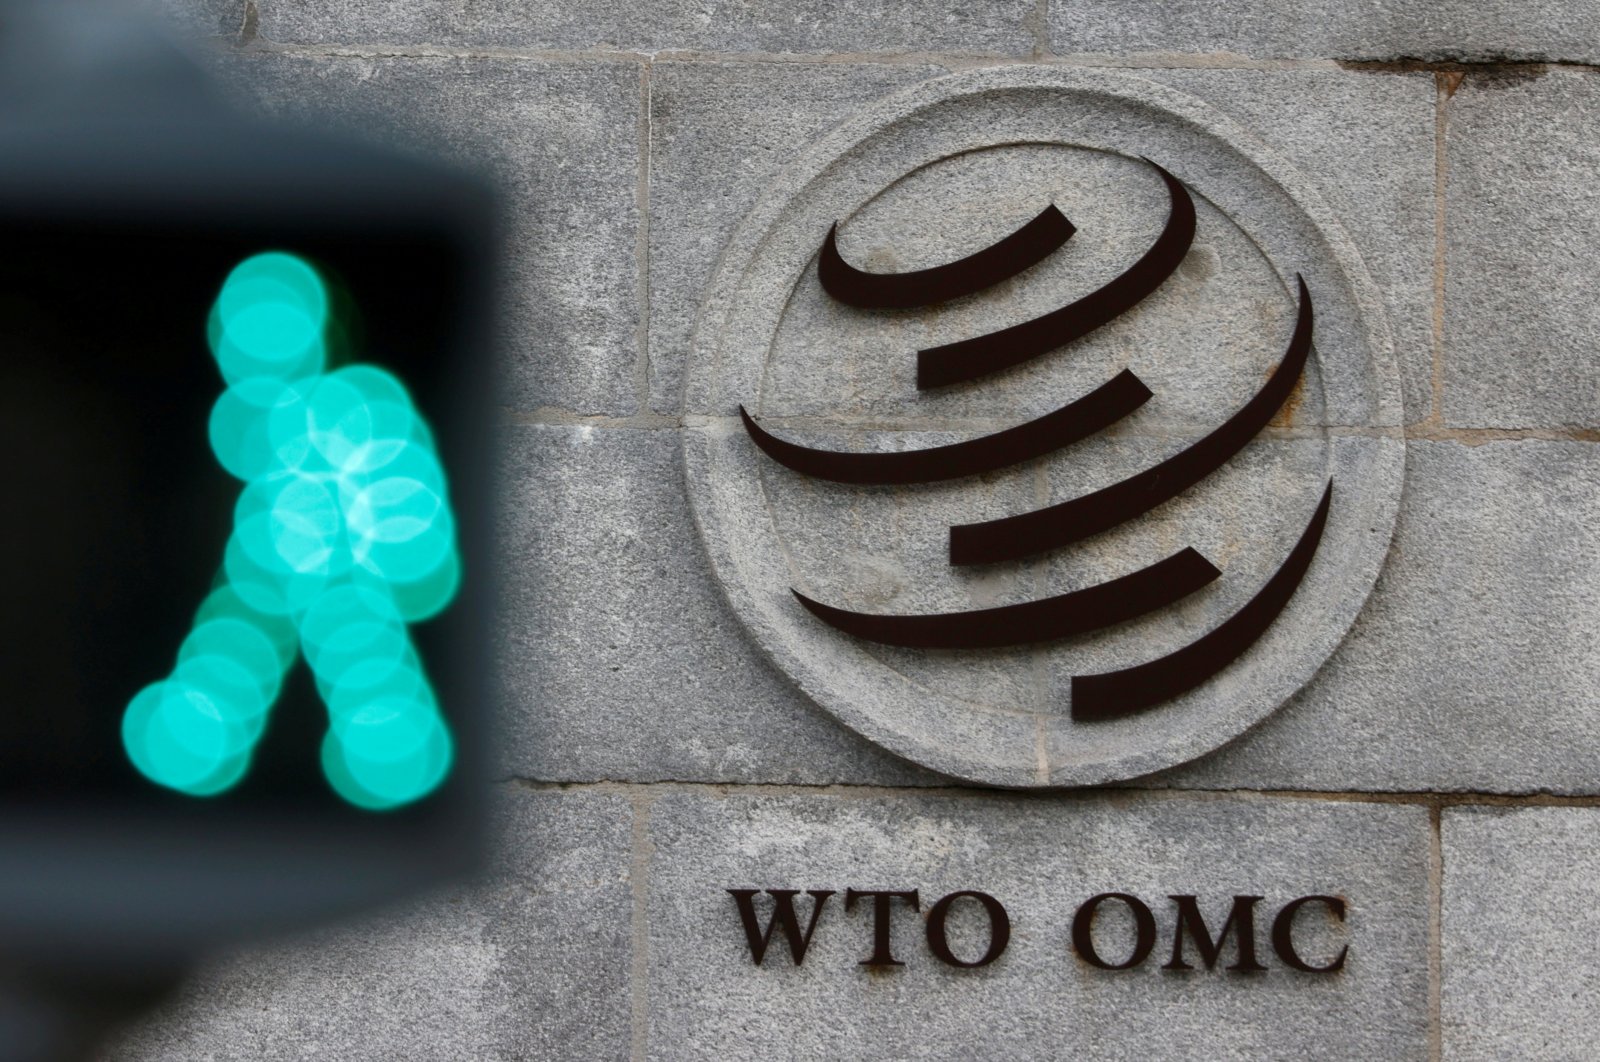 The World Trade Organization (WTO) logo adorns the front of its headquarters in Geneva, Switzerland, Oct. 28, 2020.